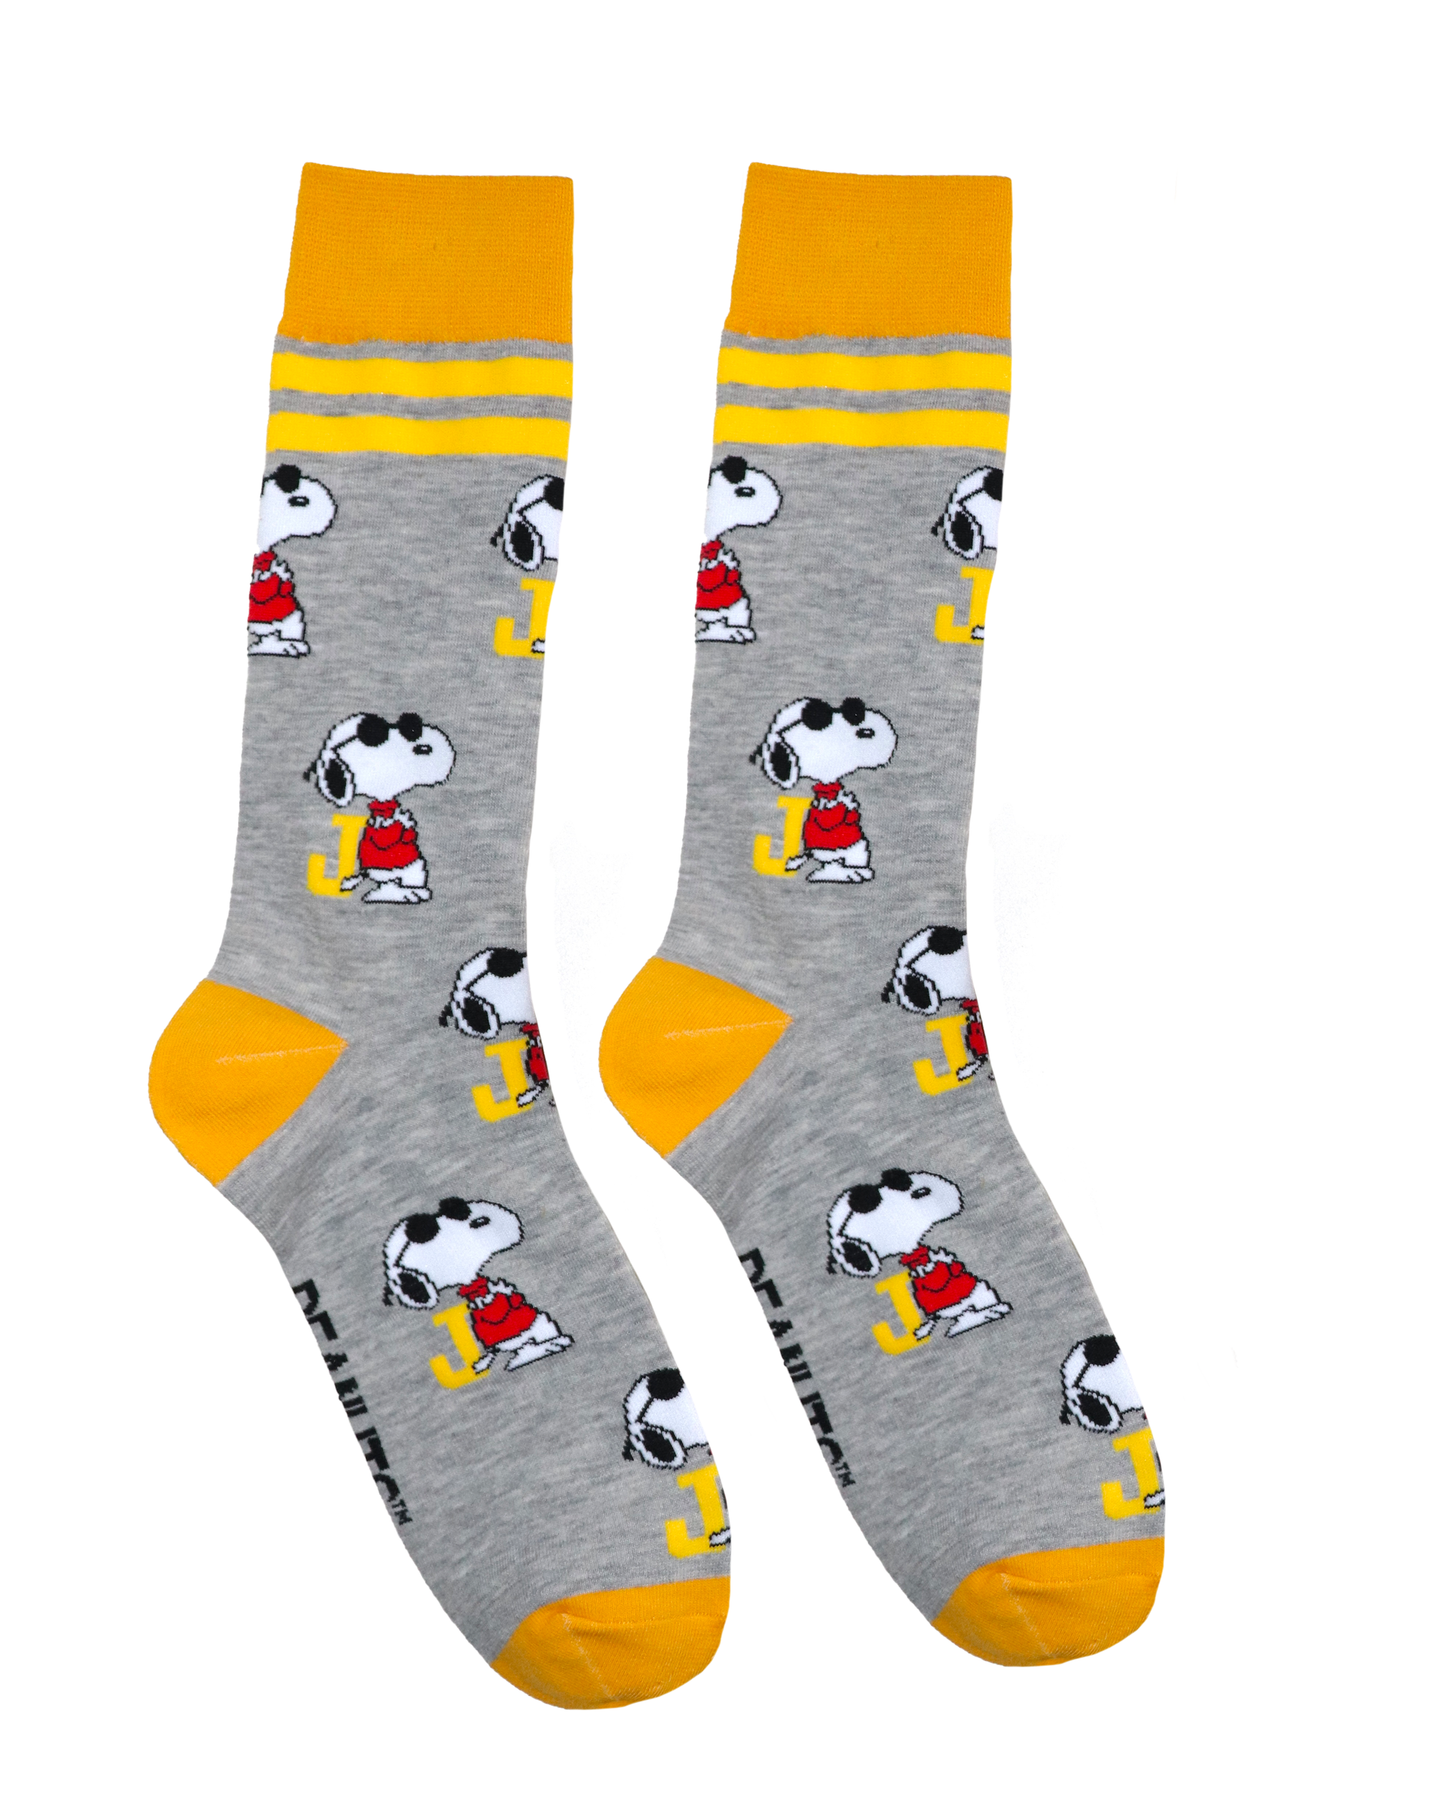 A pair of socks depicting Snoopy as Joe Cool. Grey legs, yellow cuff, heel and toe.